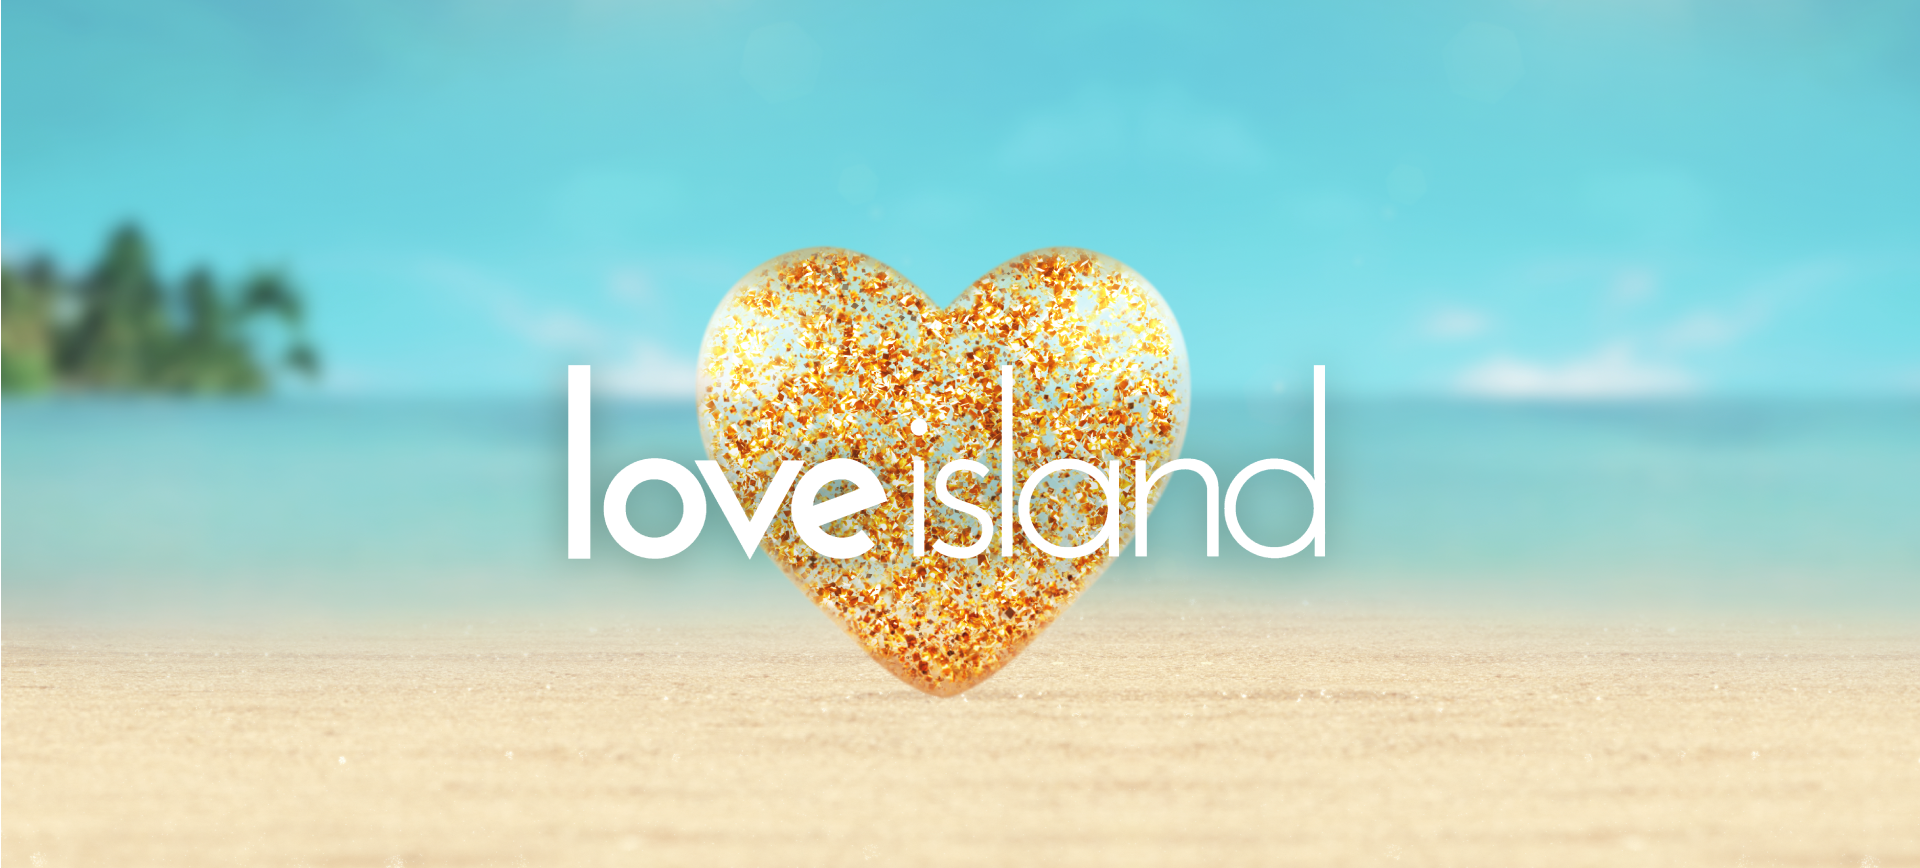 Love Island Sunglasses